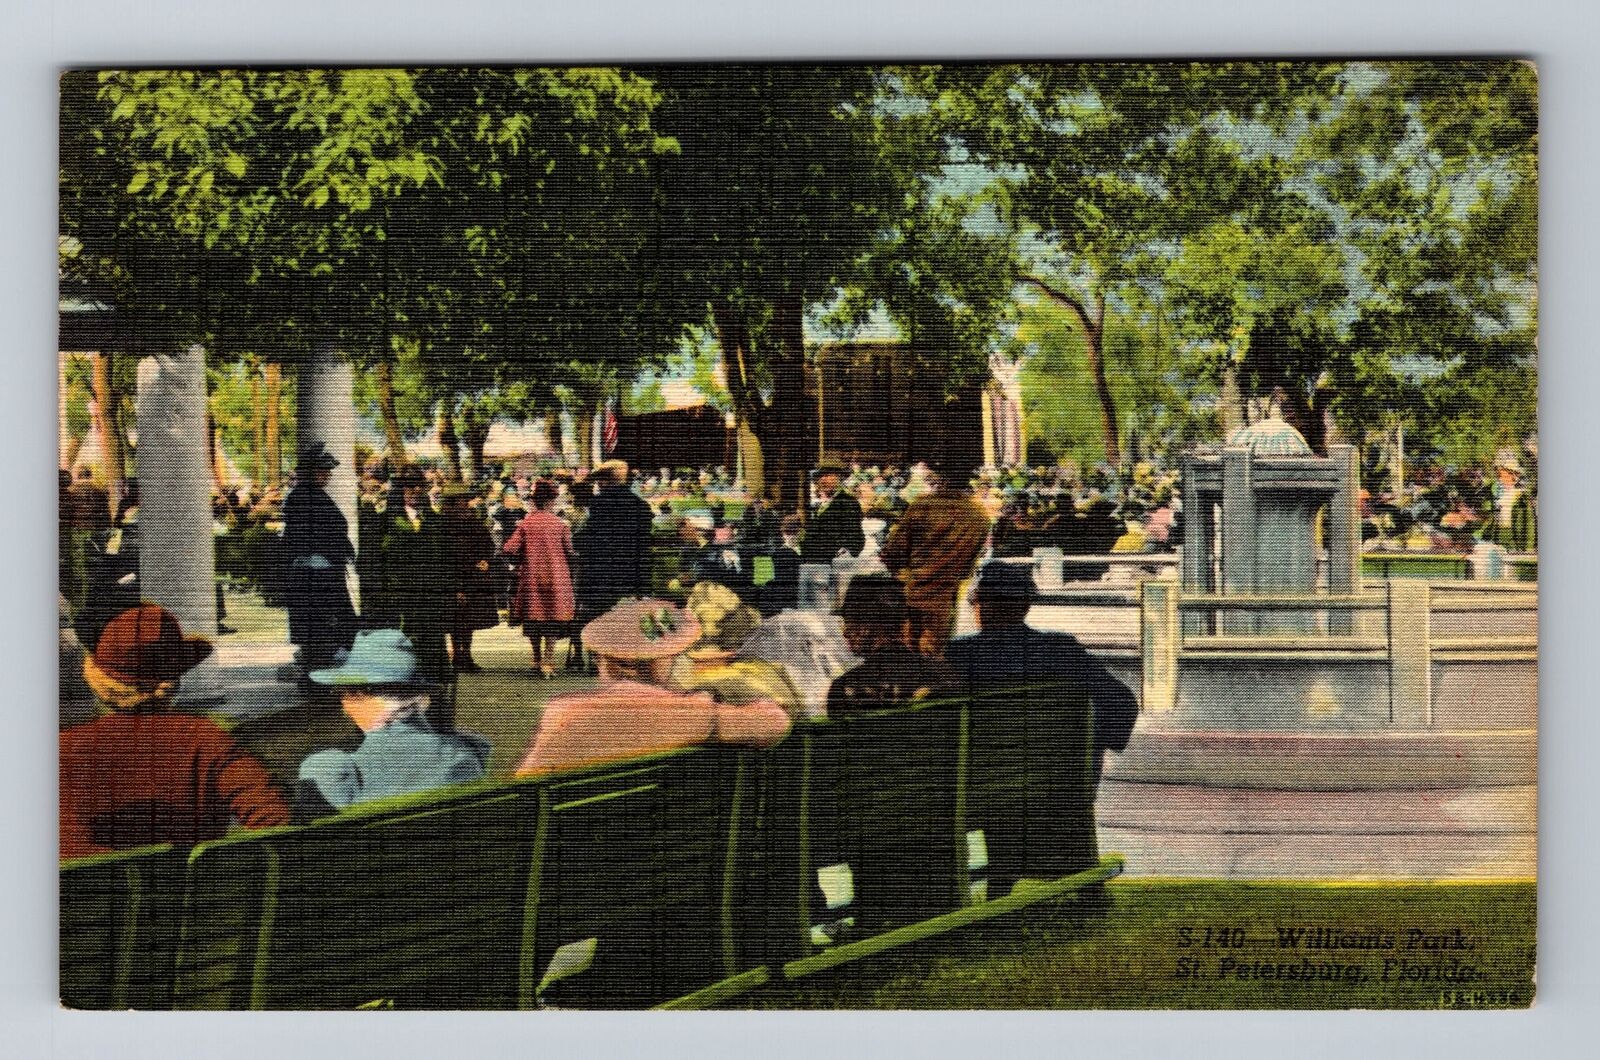 St Petersburg FL-Florida, Williams Park, Antique, Vintage c1949 Postcard